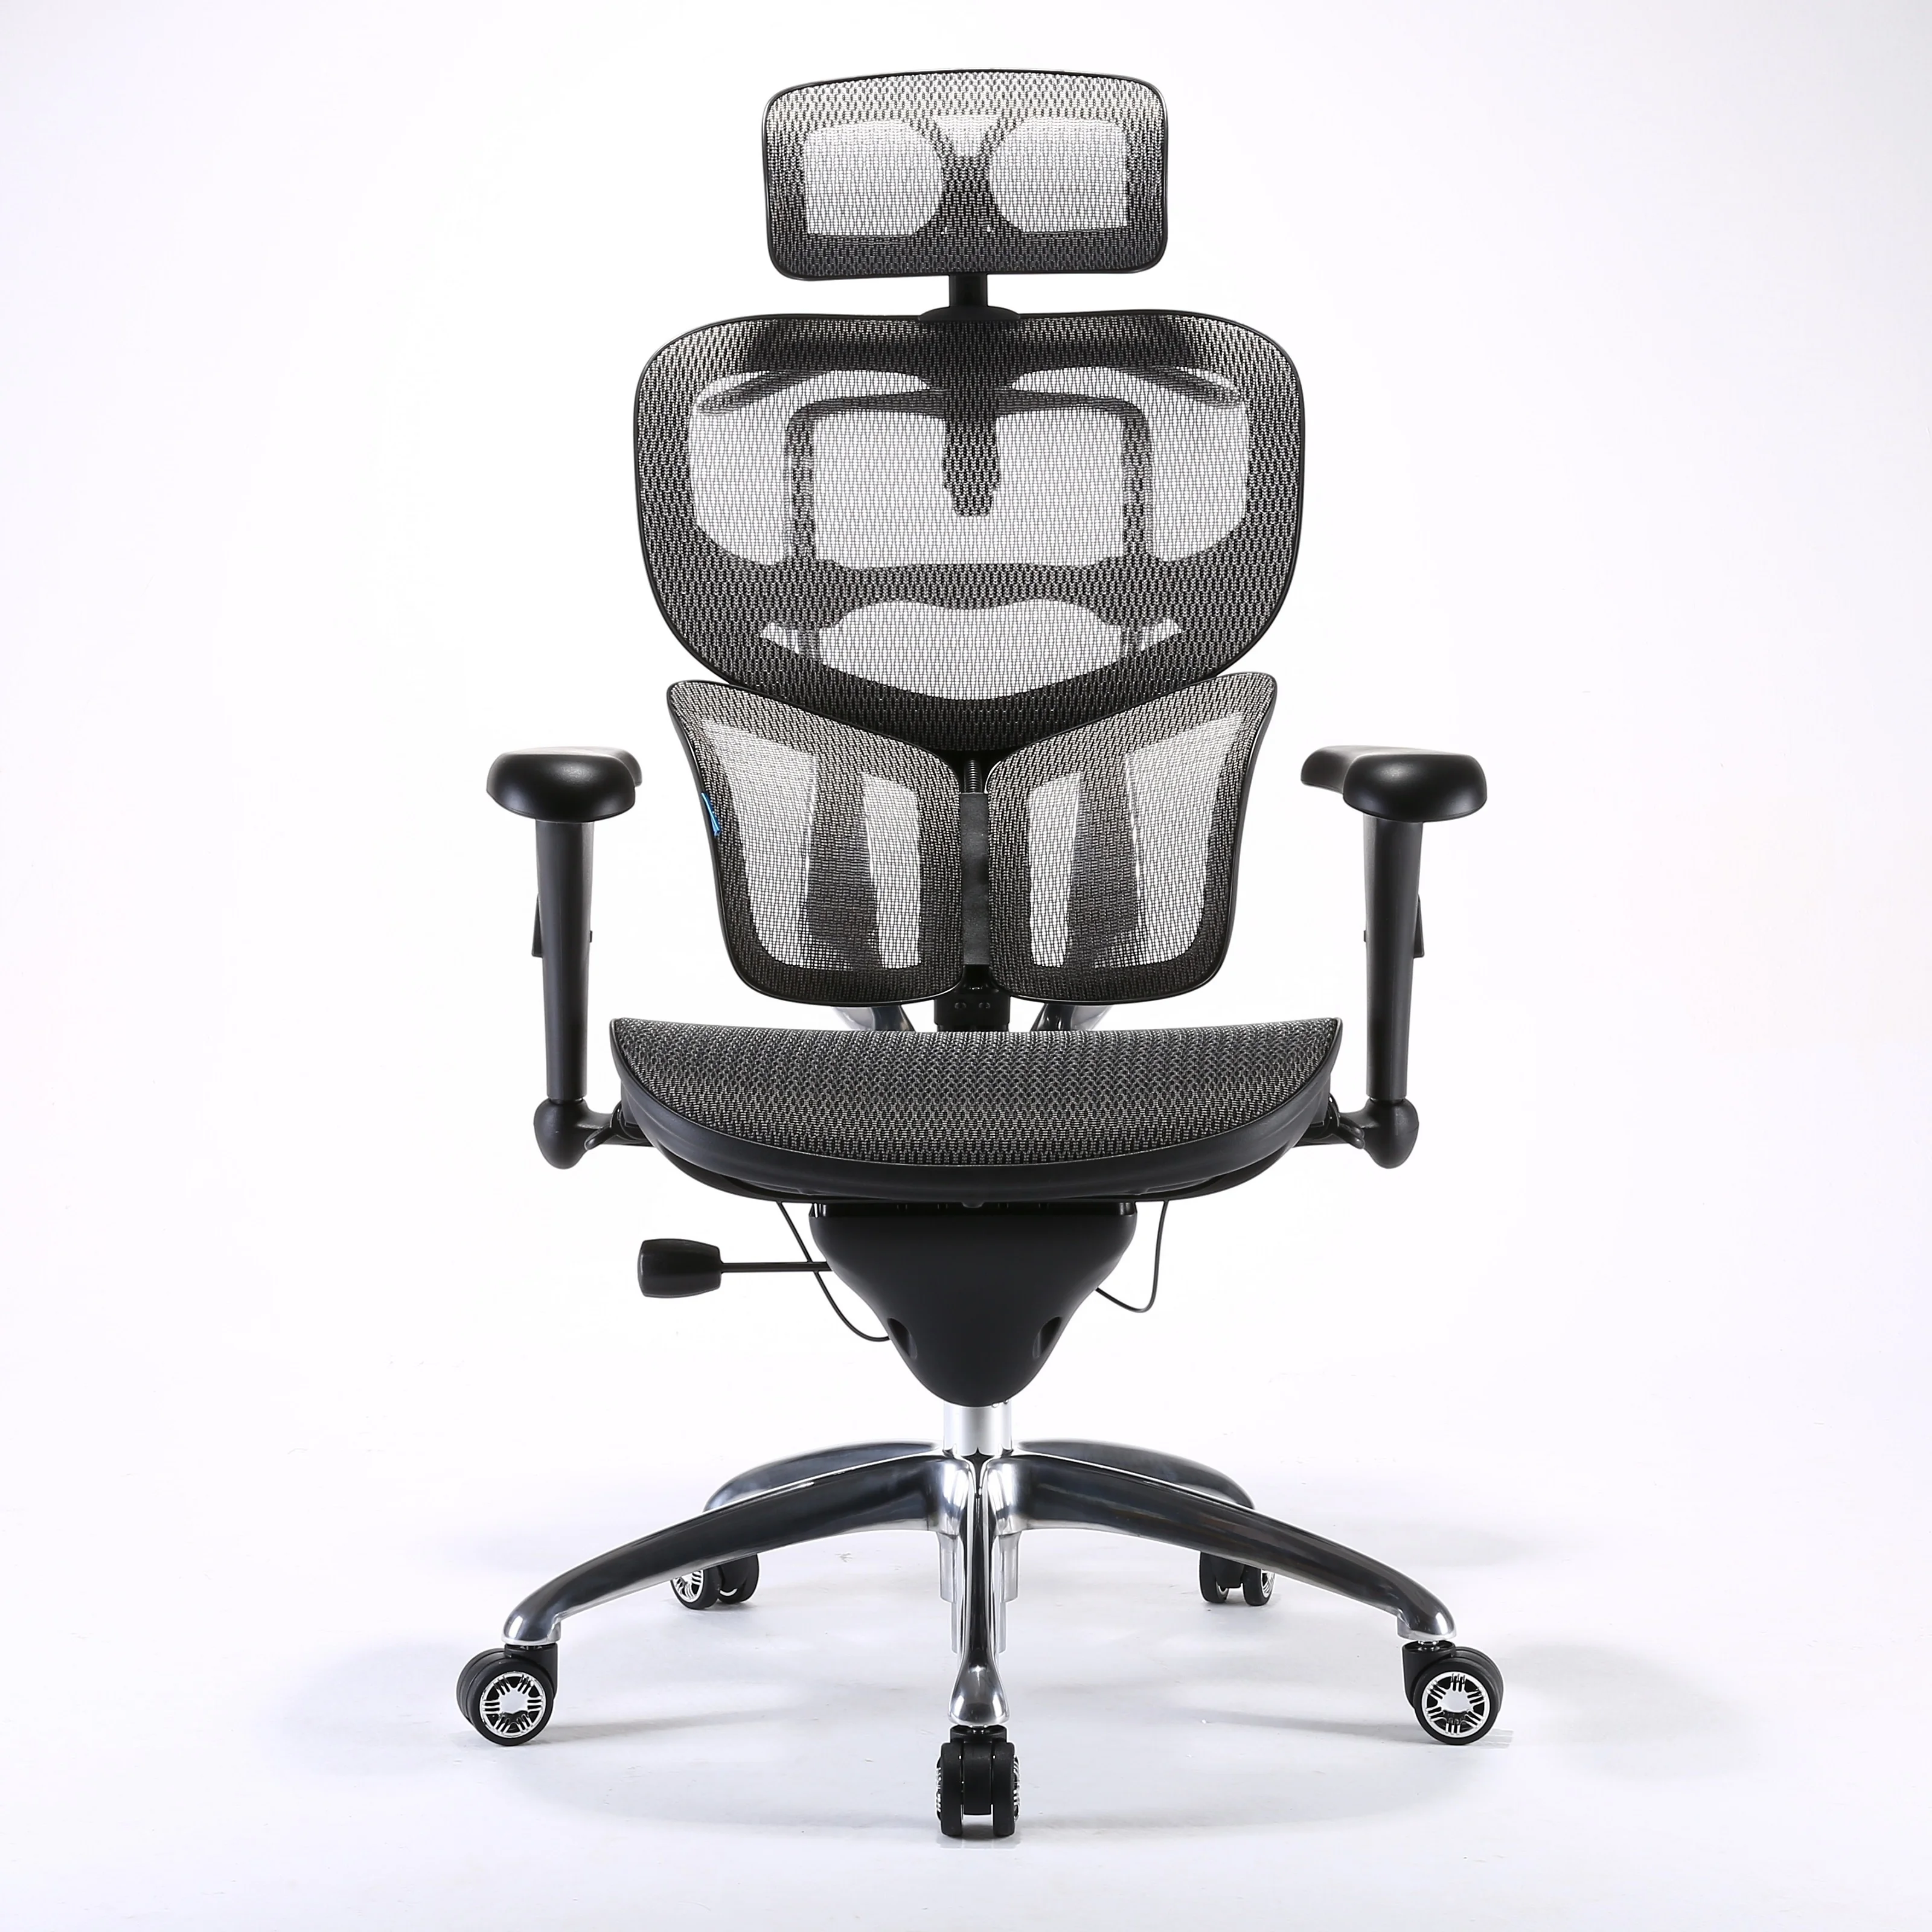 Sihoo High End Mesh Chair Ergonomic Grace Mesh Chair Revolving Office Chair Buy Ergonomic 